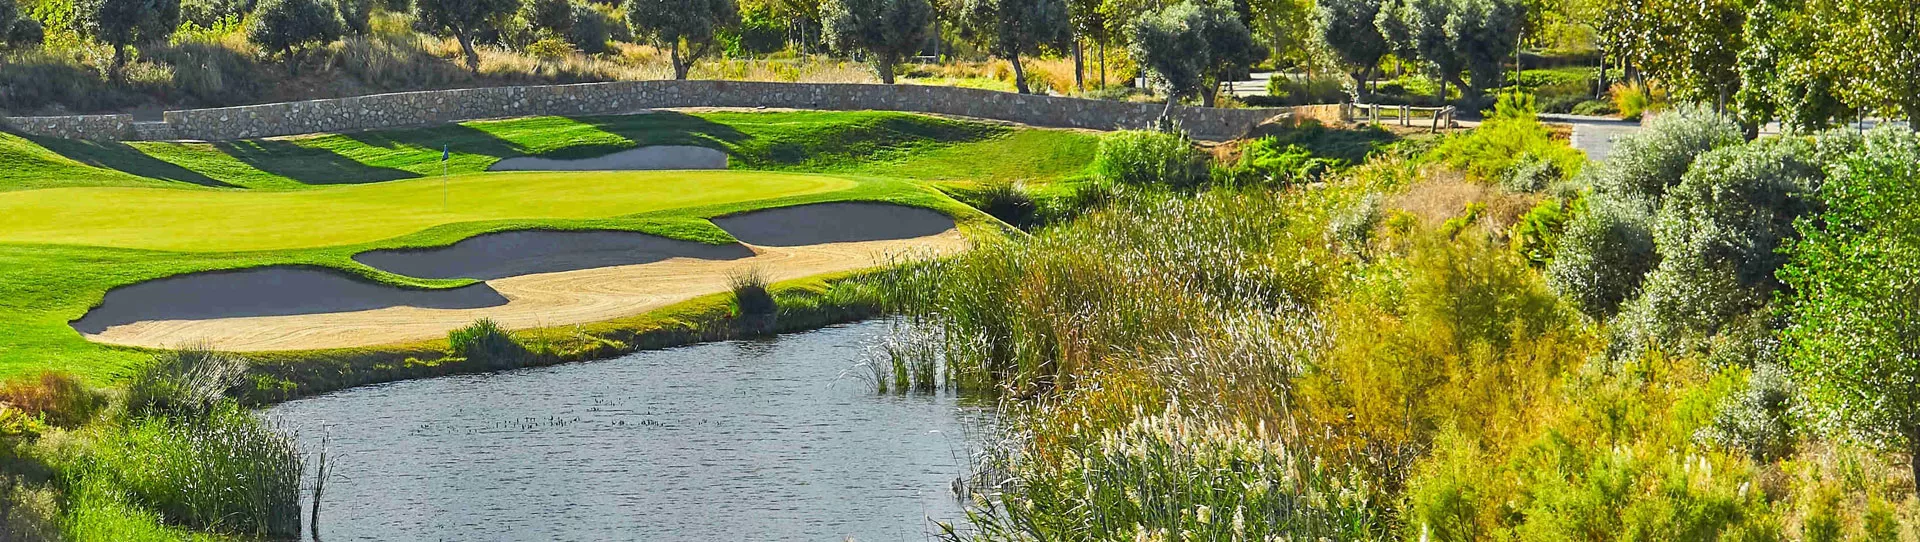 Spain golf courses - Infinitum Lakes (Ex Lumine) - Photo 2